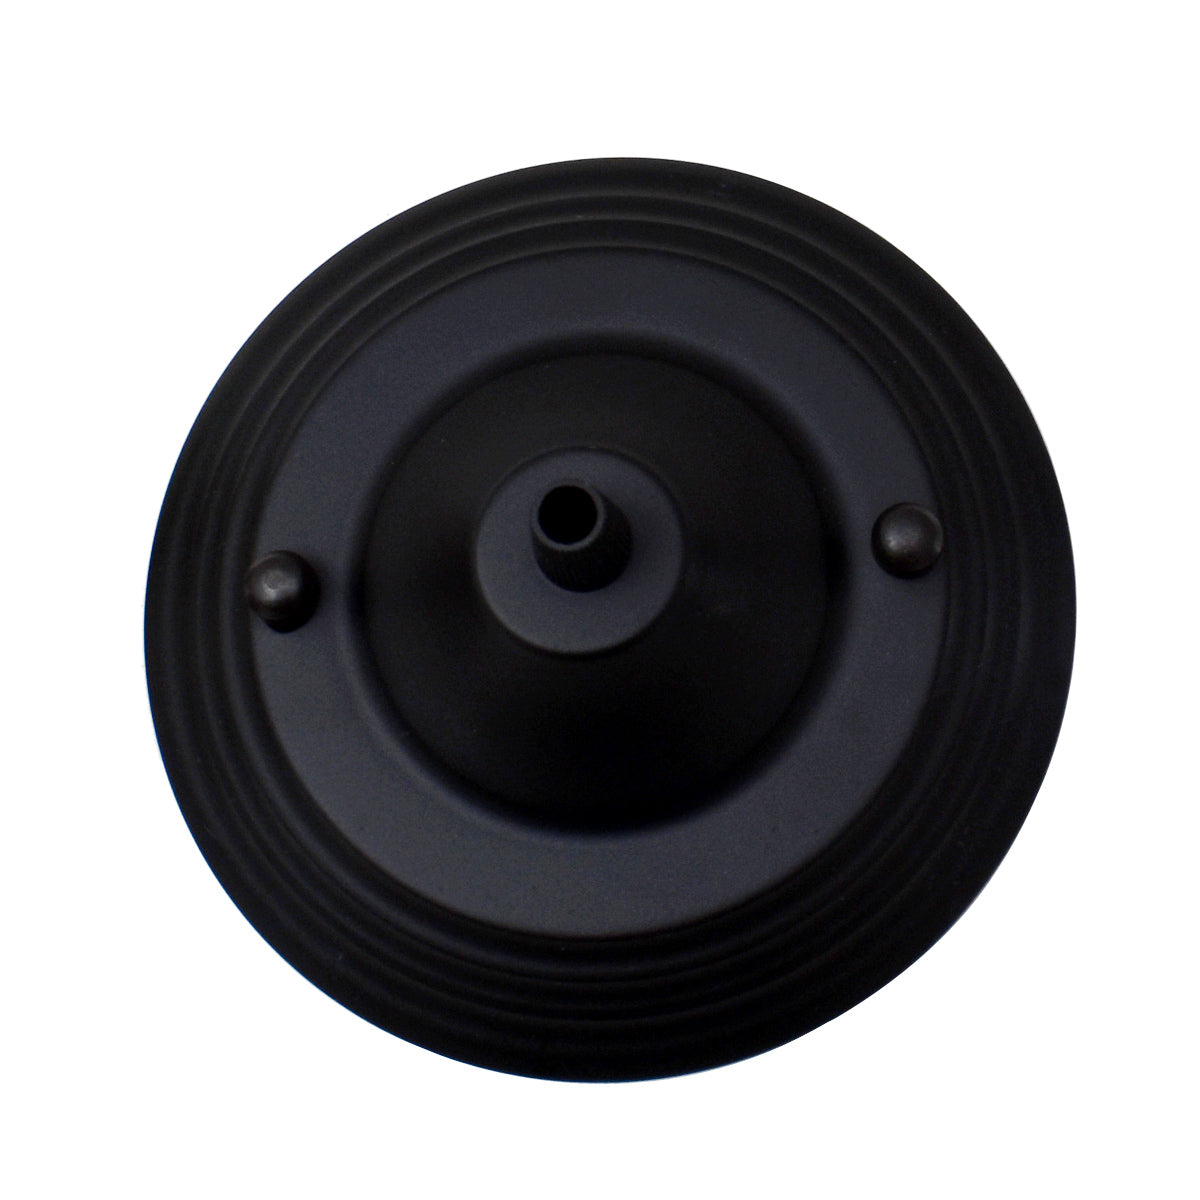 Pendant Cable Grip Black Color Flex Plate For Light Fitting 140mm Choose Ceiling Rose~2651 - LEDSone UK Ltd